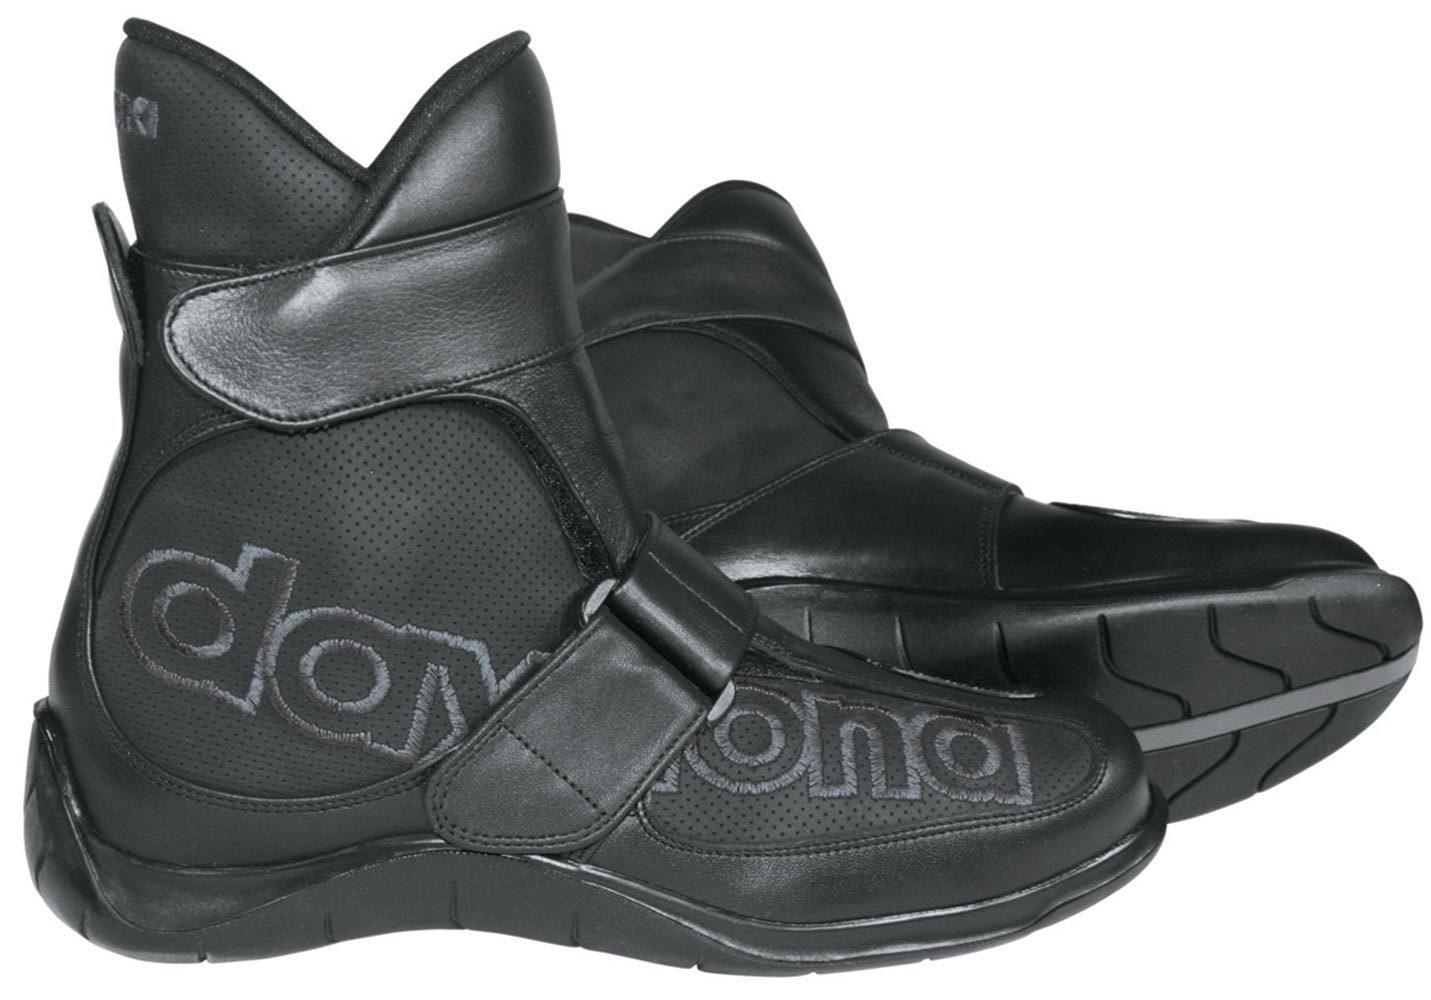 Daytona Shorty Chaussures de moto Noir 34